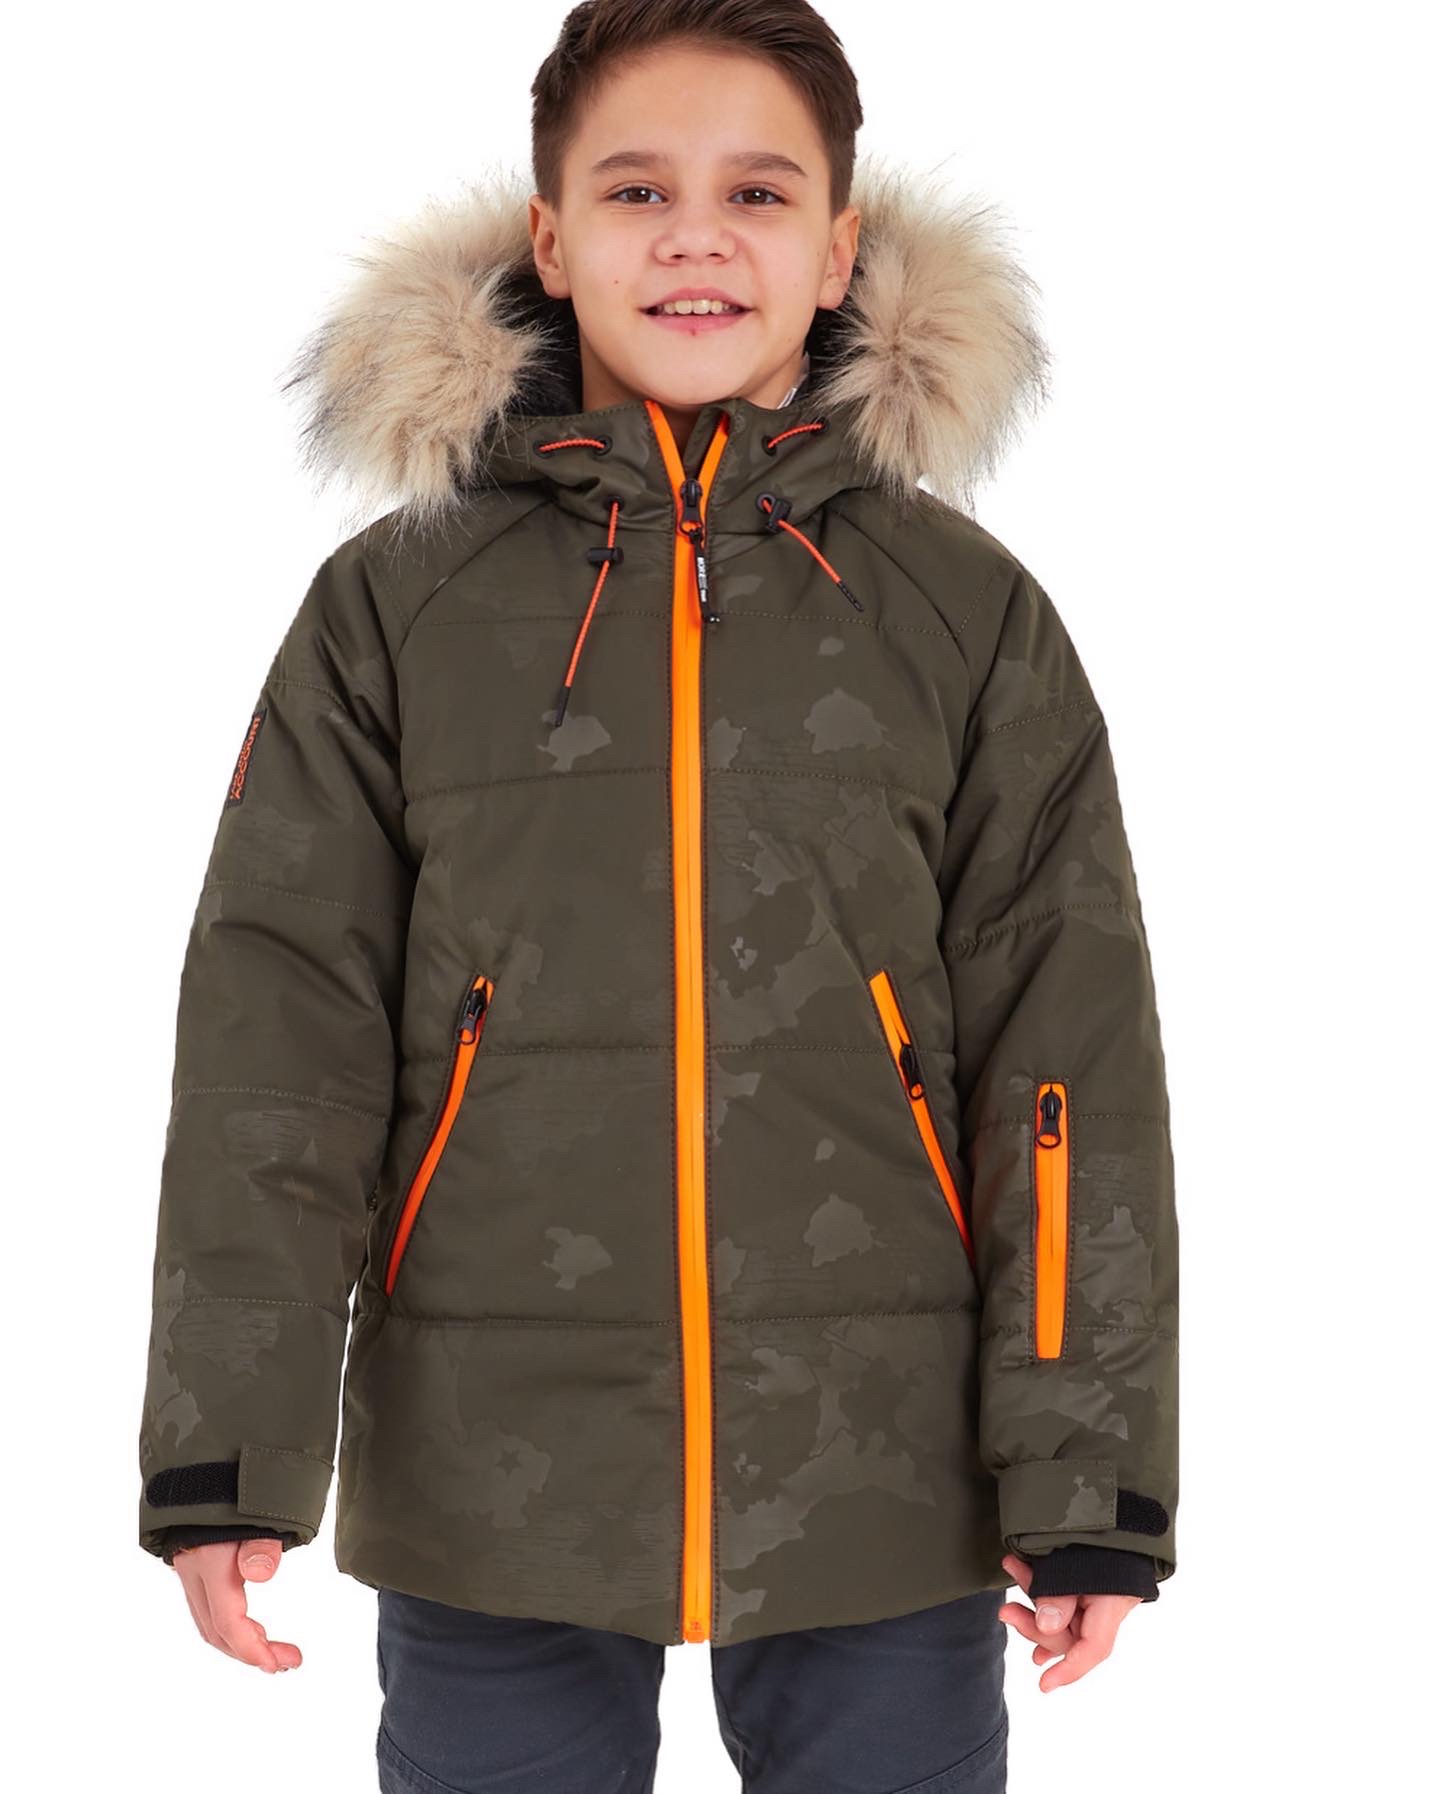 Фото товара Куртка зимняя для мальчика 455-22з от Батик